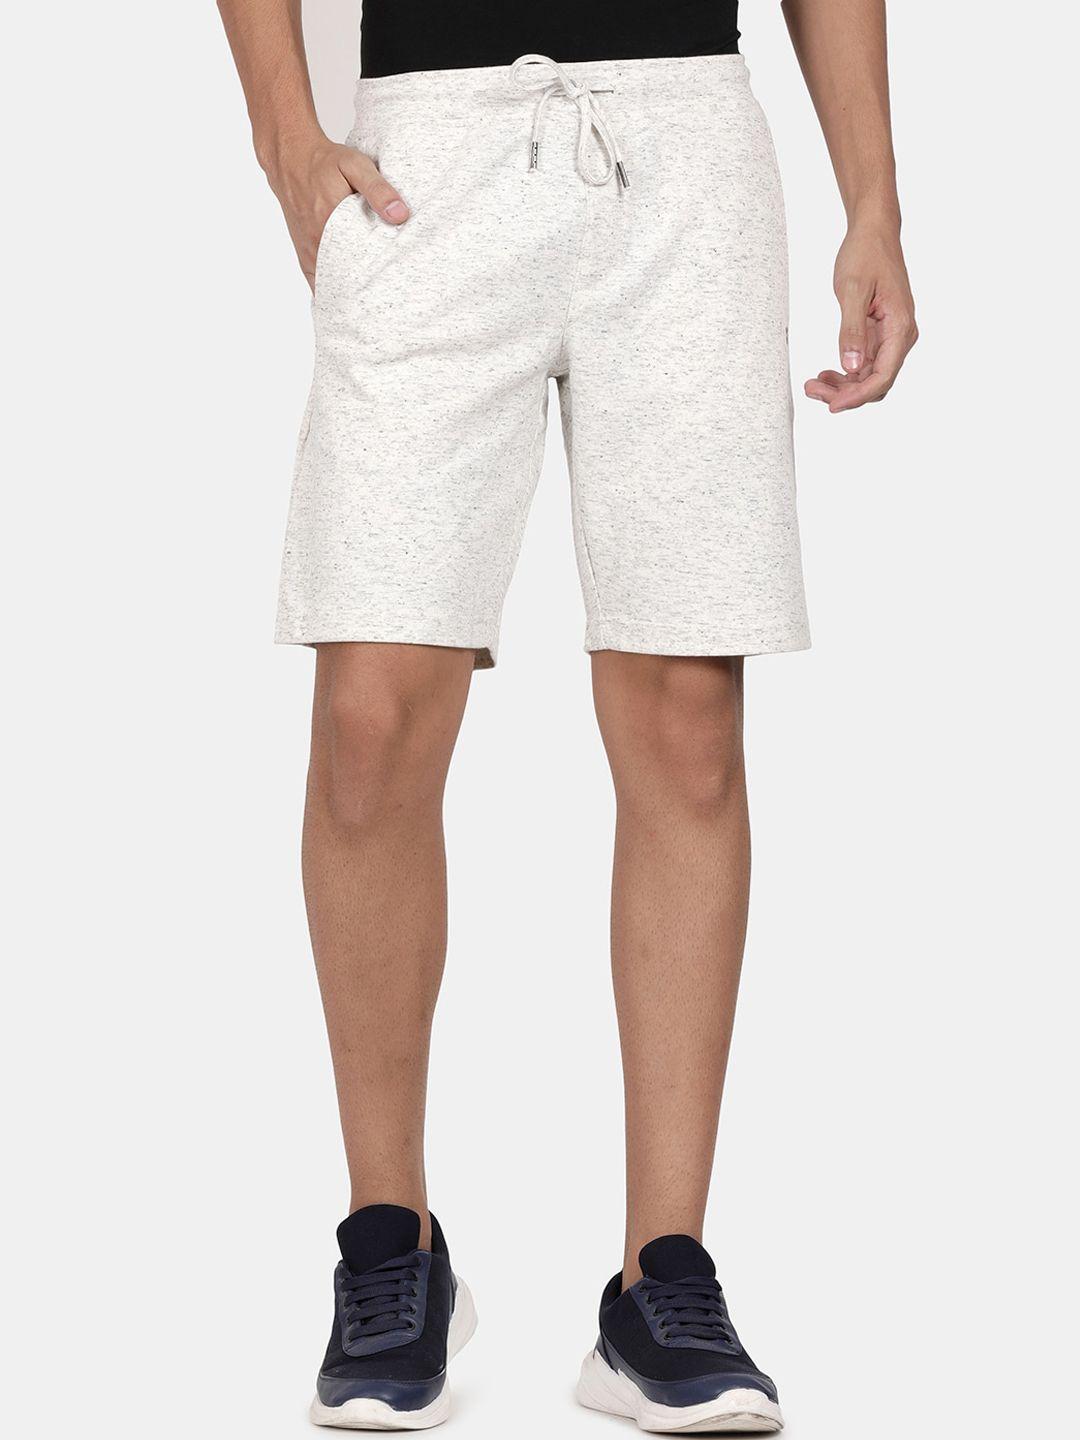 t-base-men-white-shorts